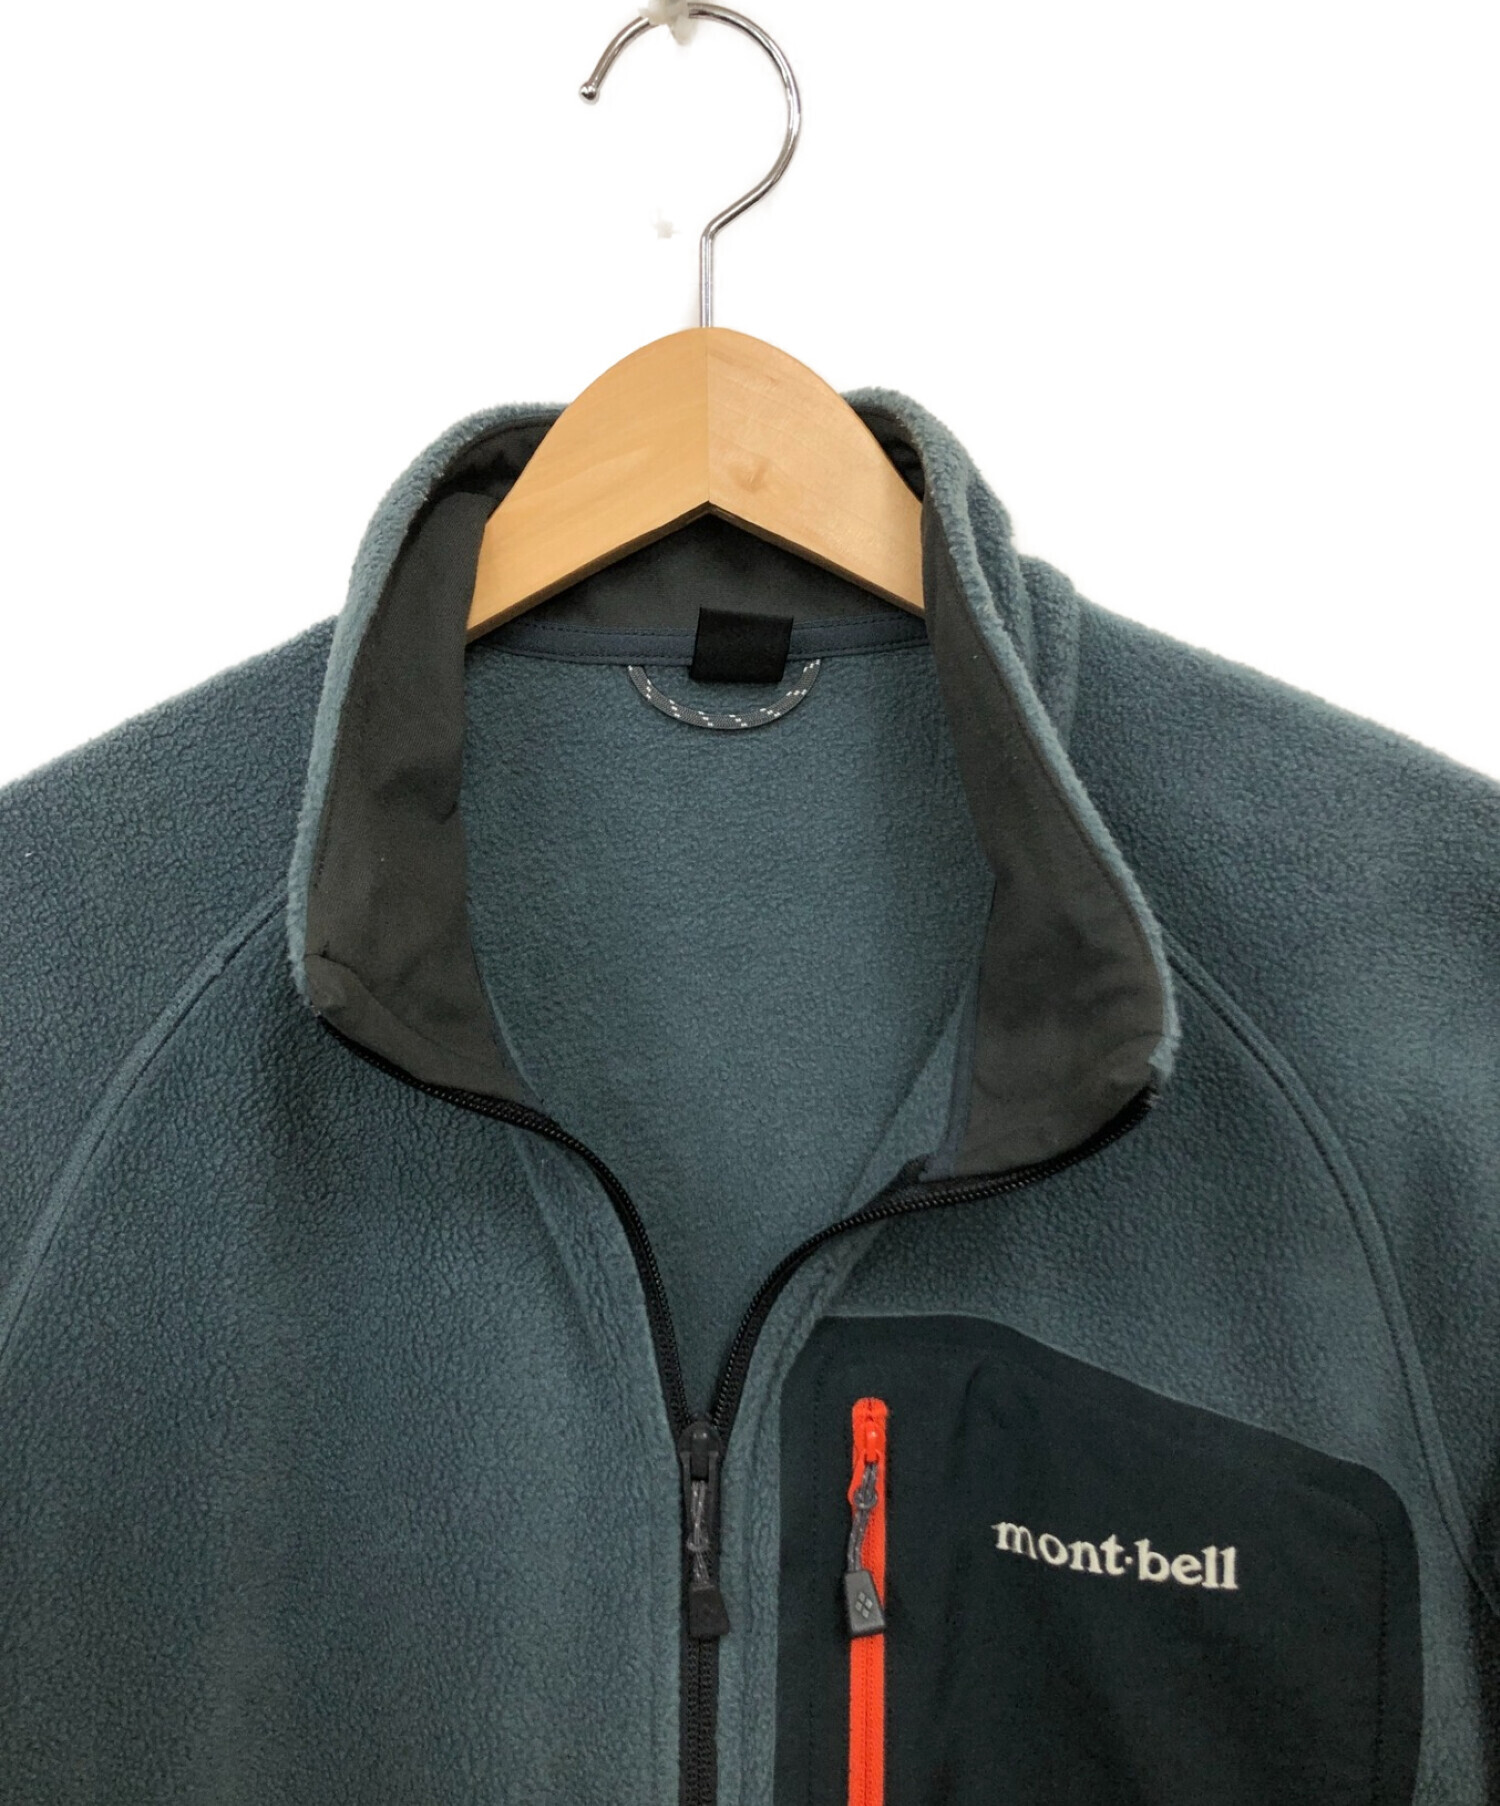 mont-bell (モンベル) フリースジャケット オリーブ サイズ:XL